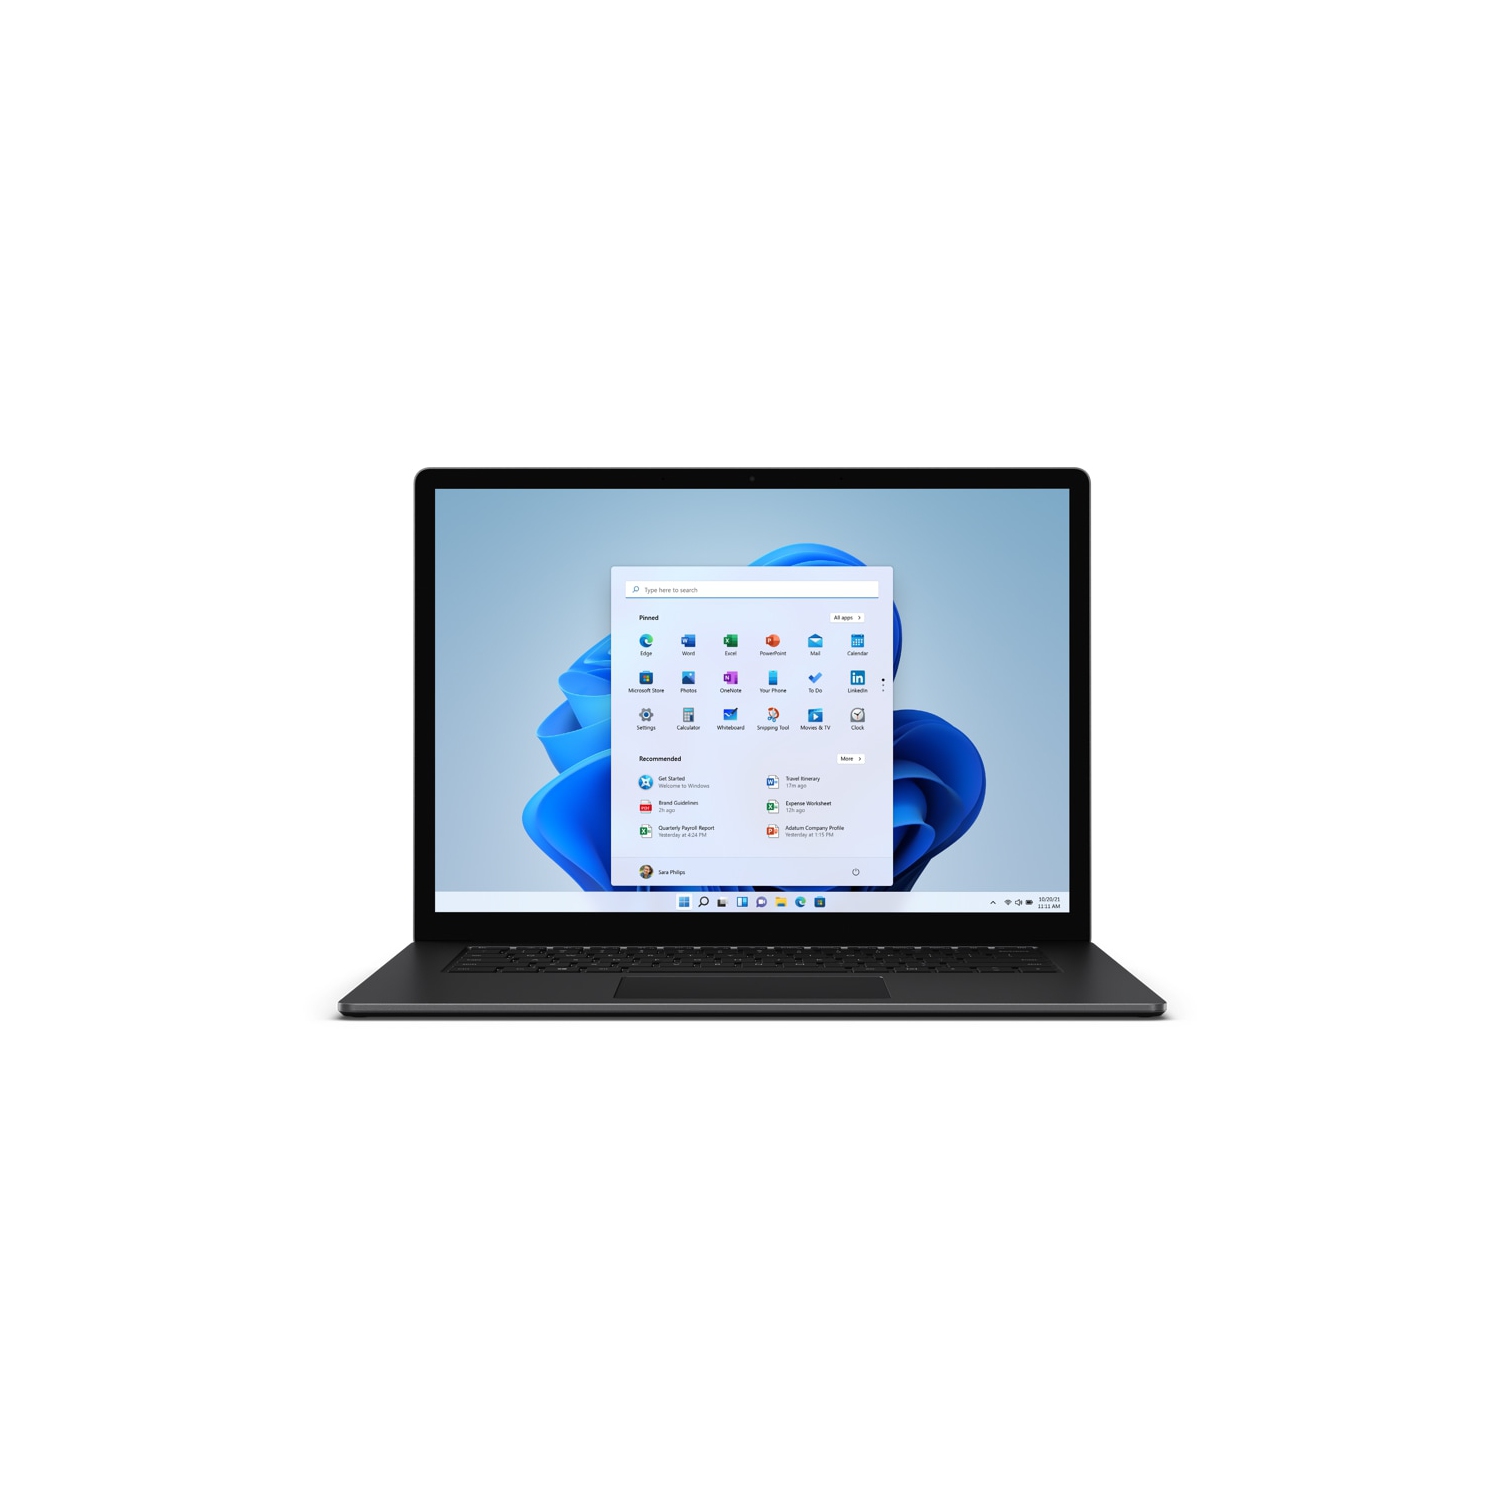 Refurbished (Excellent) Microsoft Surface Laptop 4 - Intel Core i5-1135G7/16GB LPDDR4x/512GB SSD/Windows 11 Home/ 13.5" Screen - Black